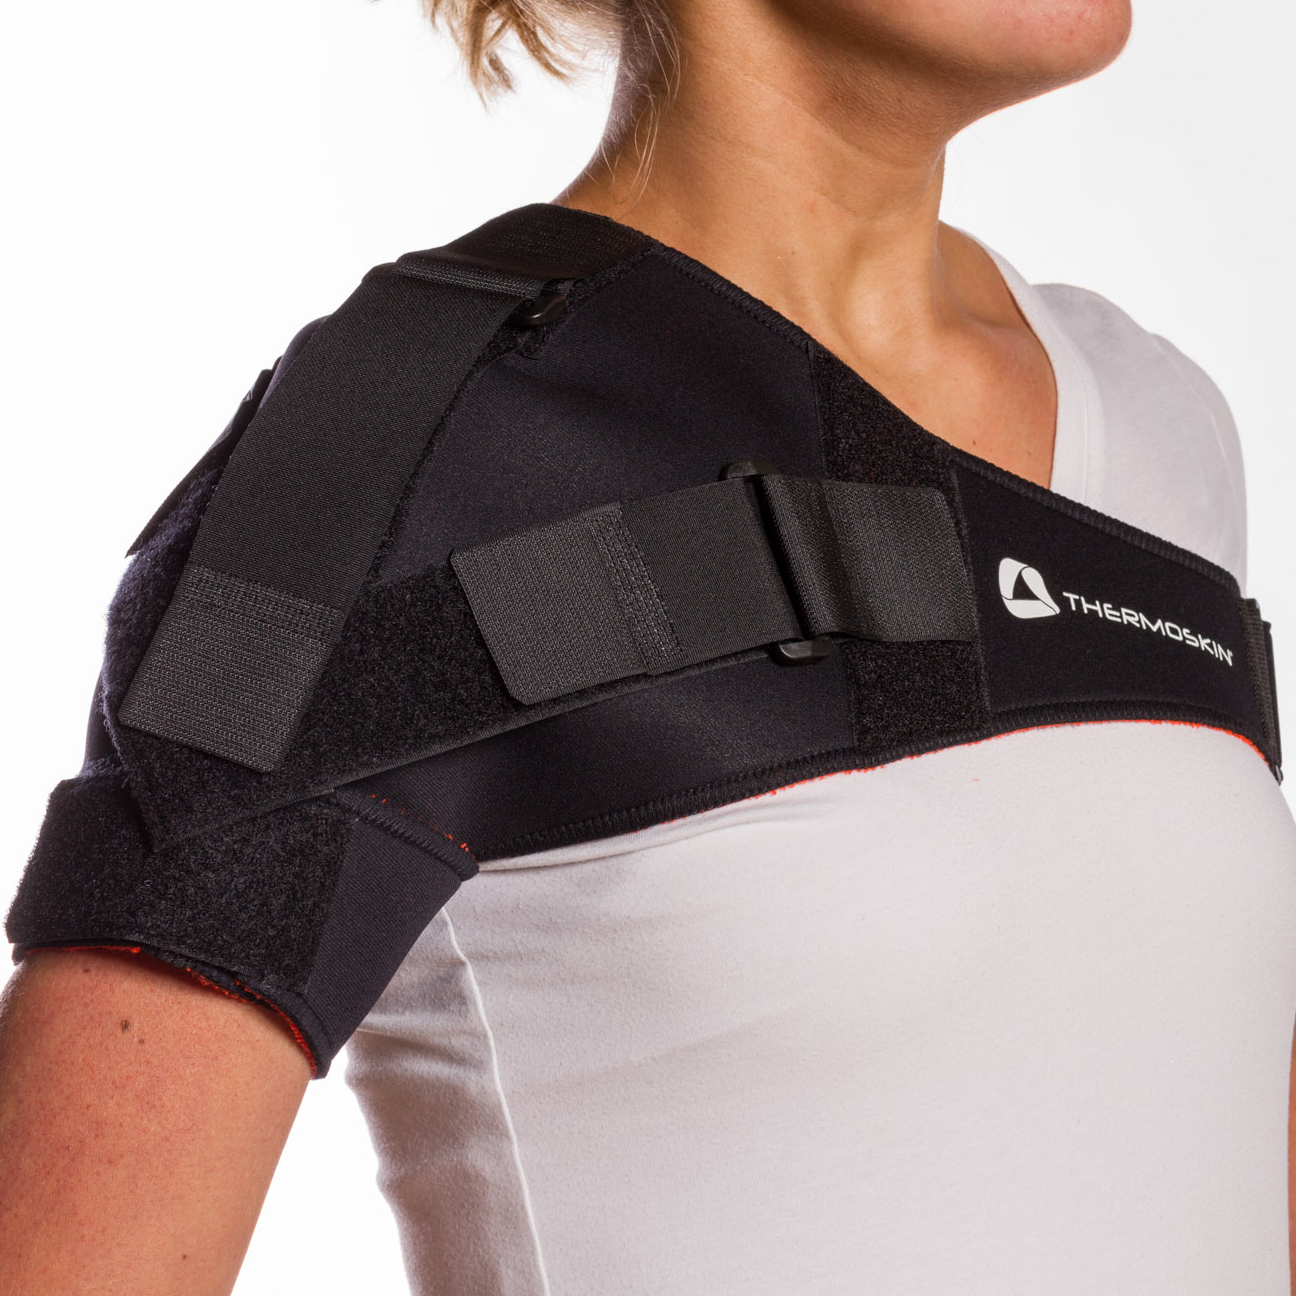 Adjustable Shoulder Stabilizer with Harness, Black, One Size Fits Most ...